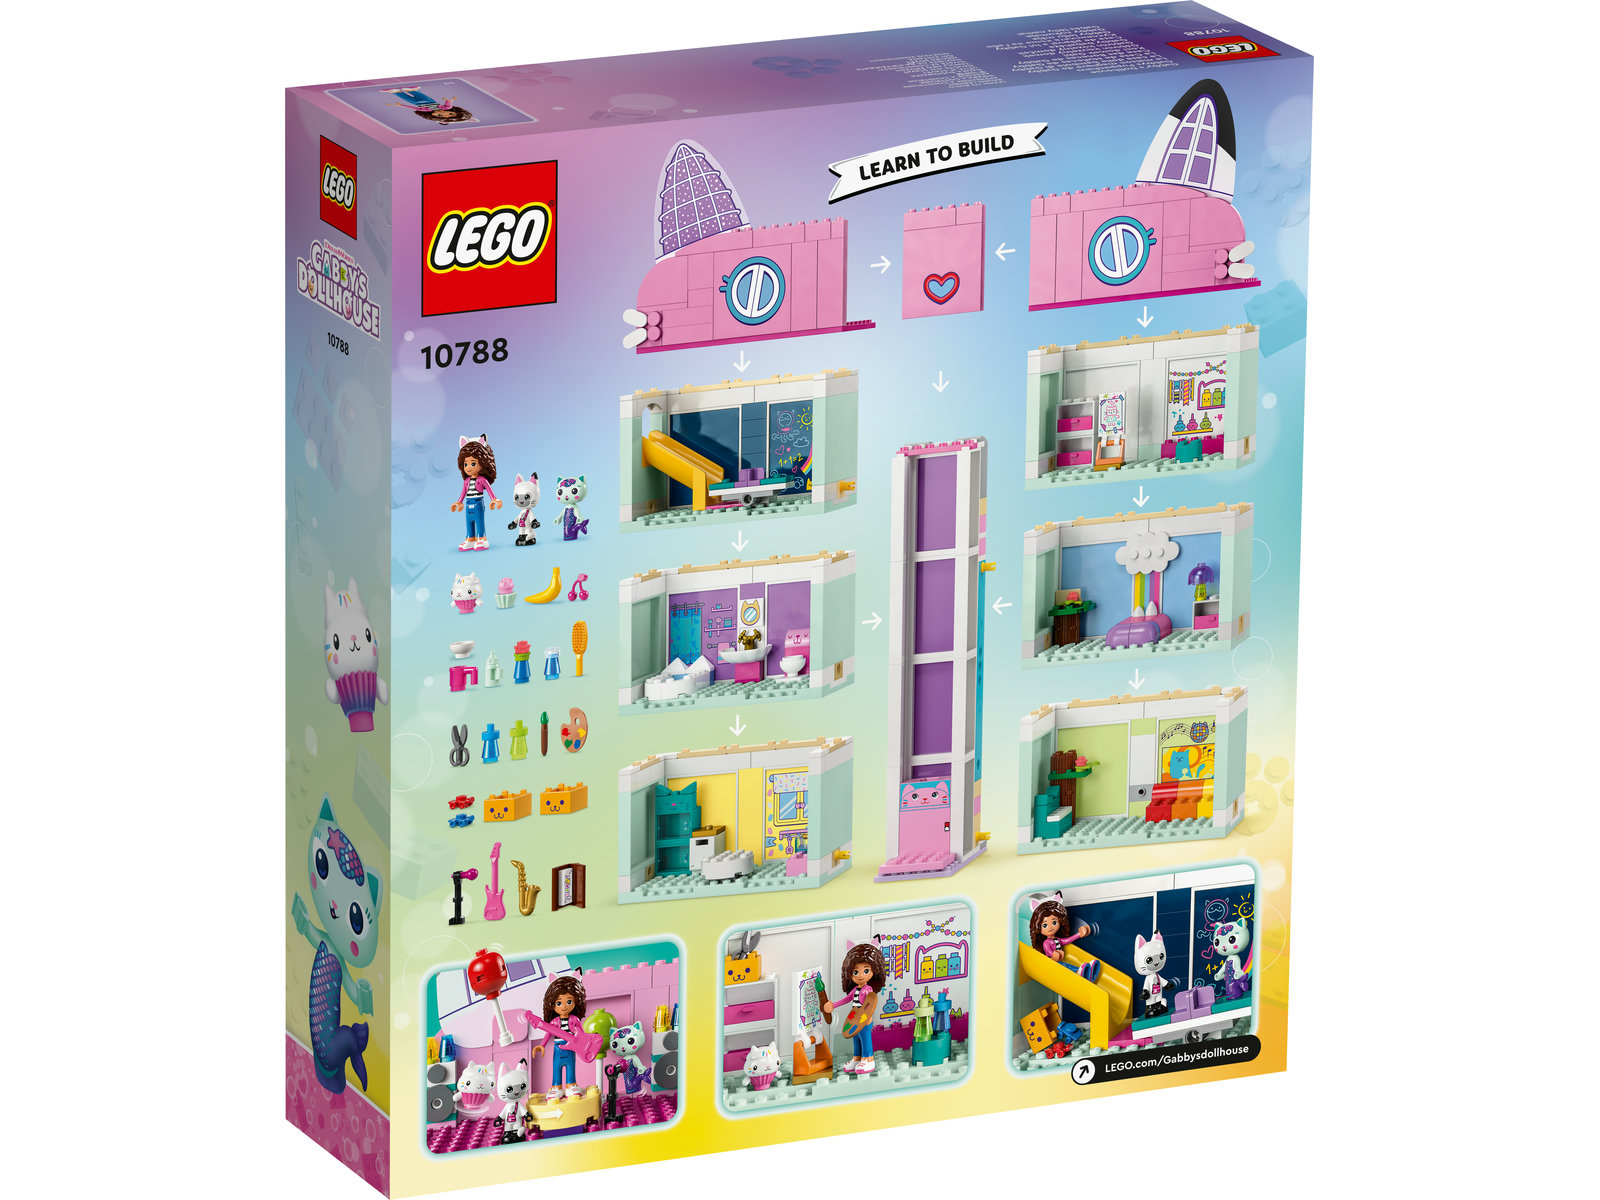 LEGO® Gabby's Dollhouse 10788 - Gabbys Puppenhaus